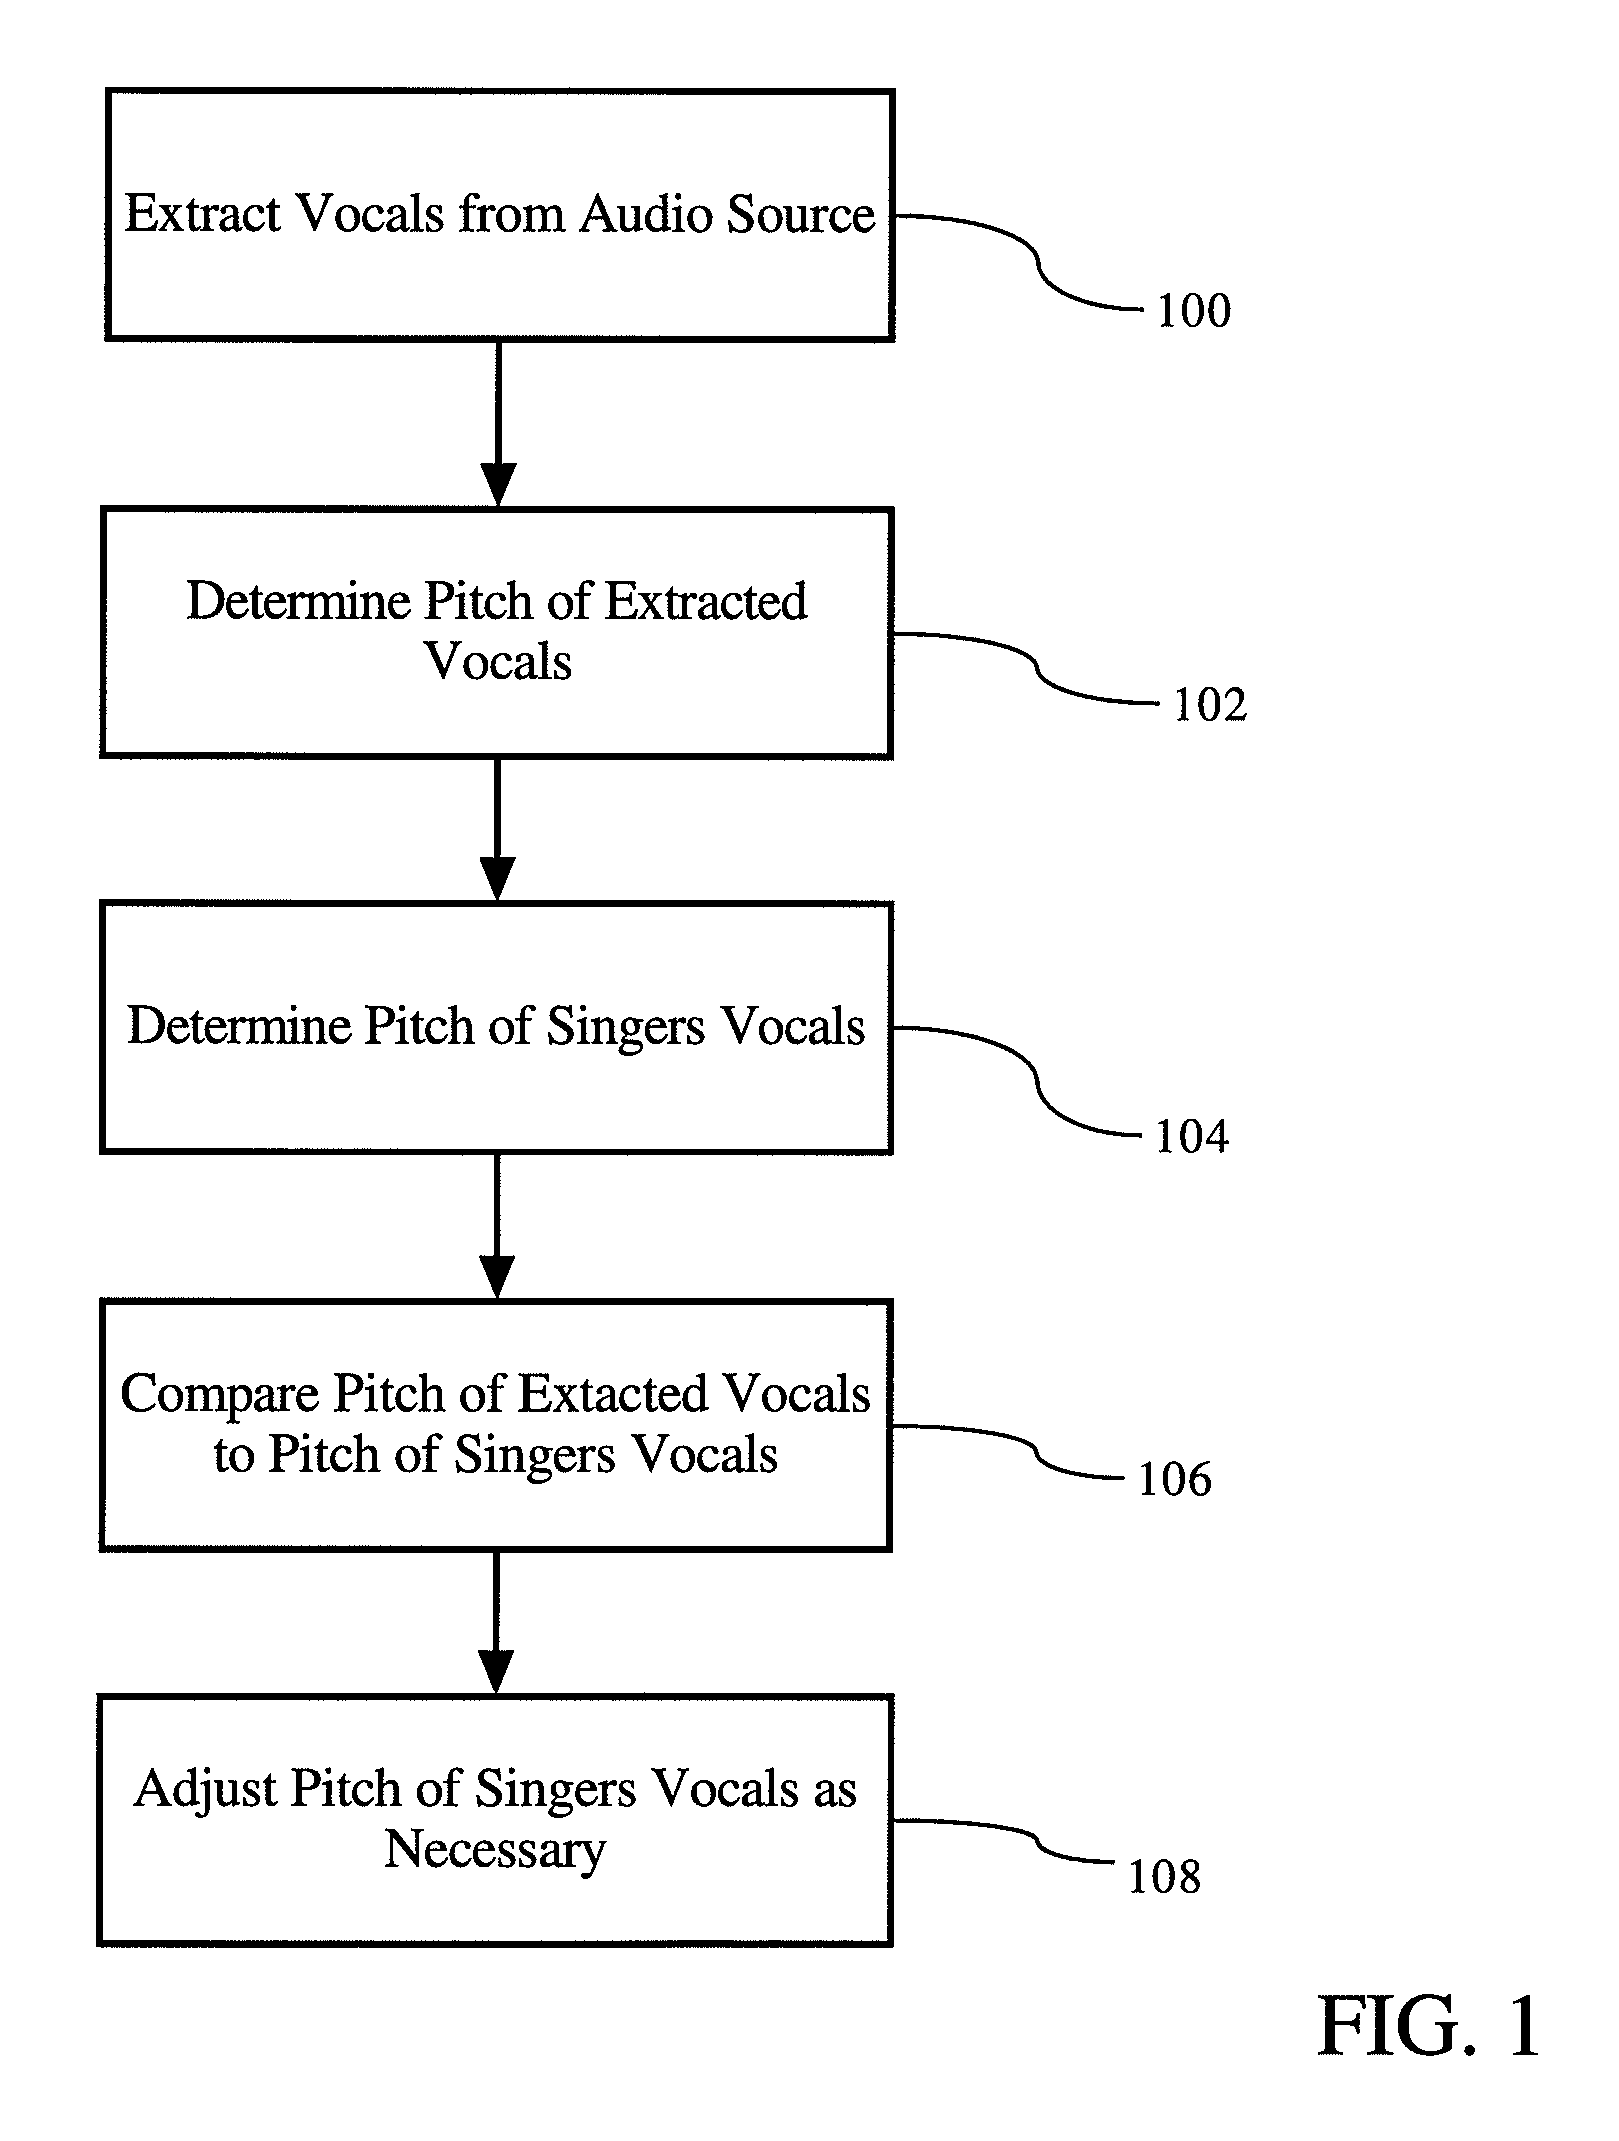 System and method for pitch adjusting vocals